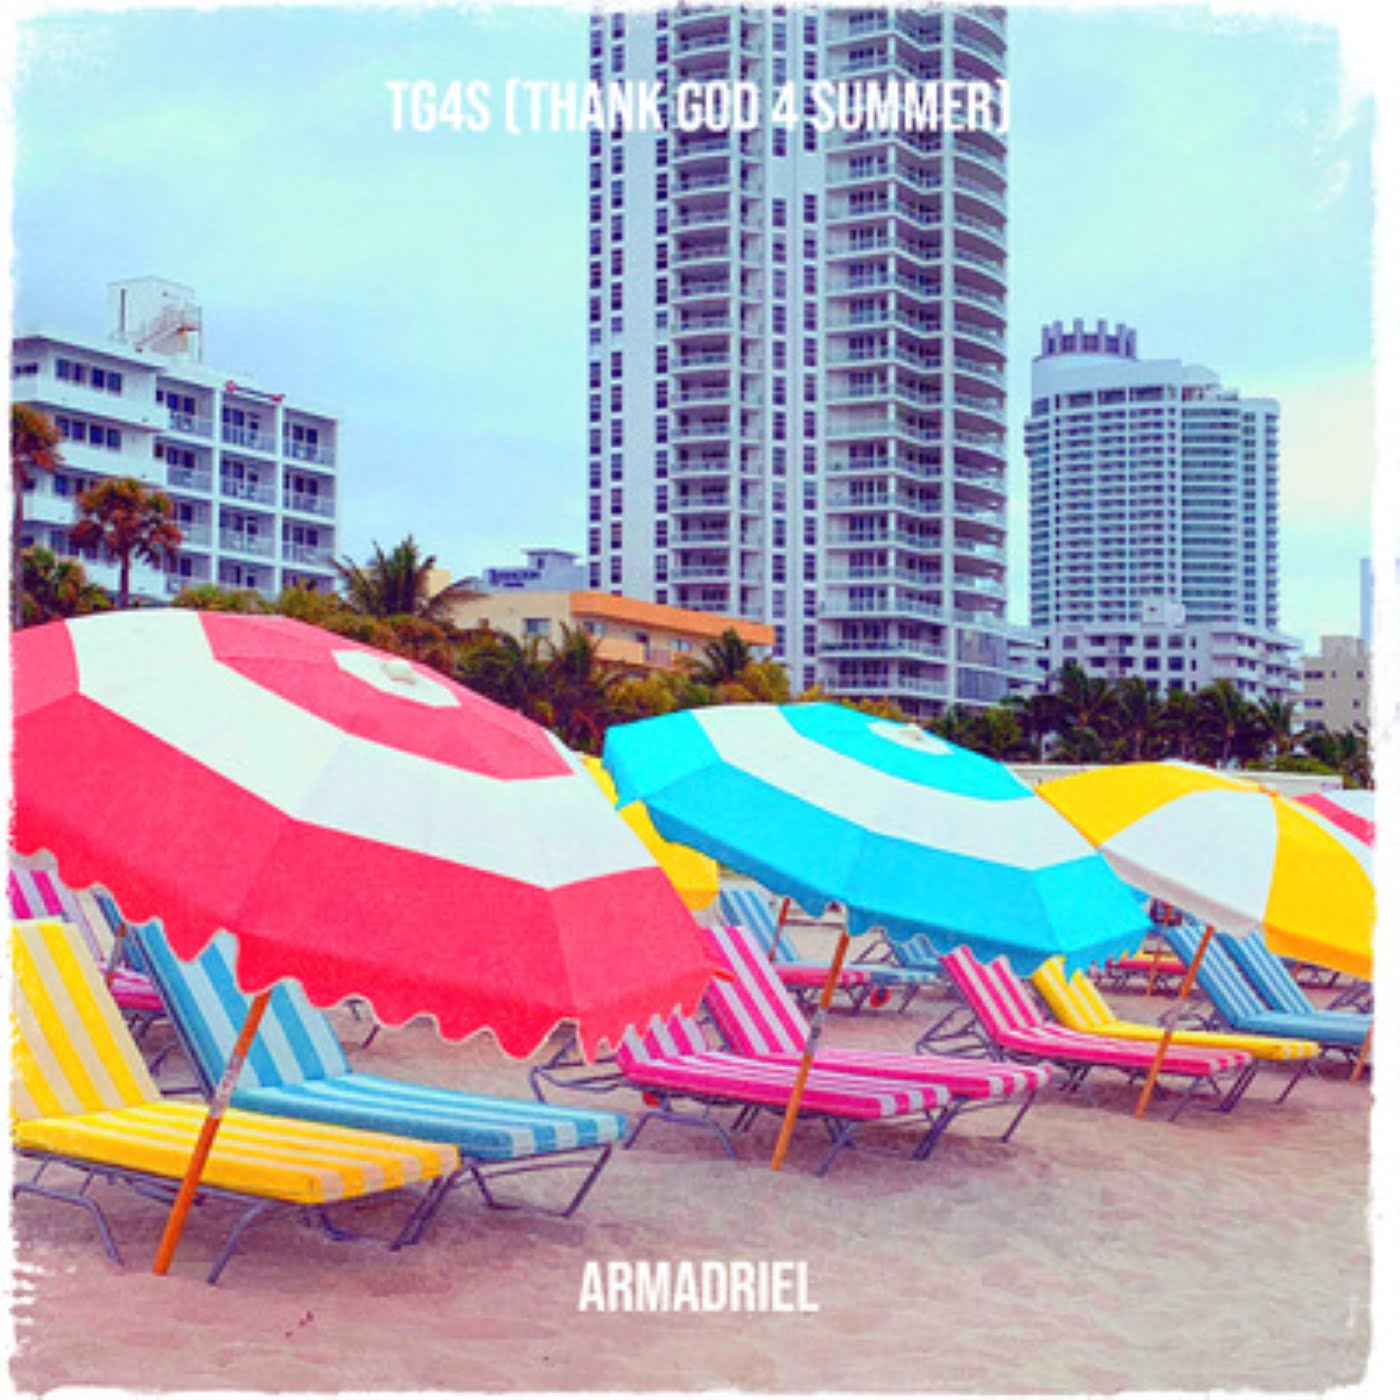 ARMADRIEL - TG4S - Thank God 4 Summer